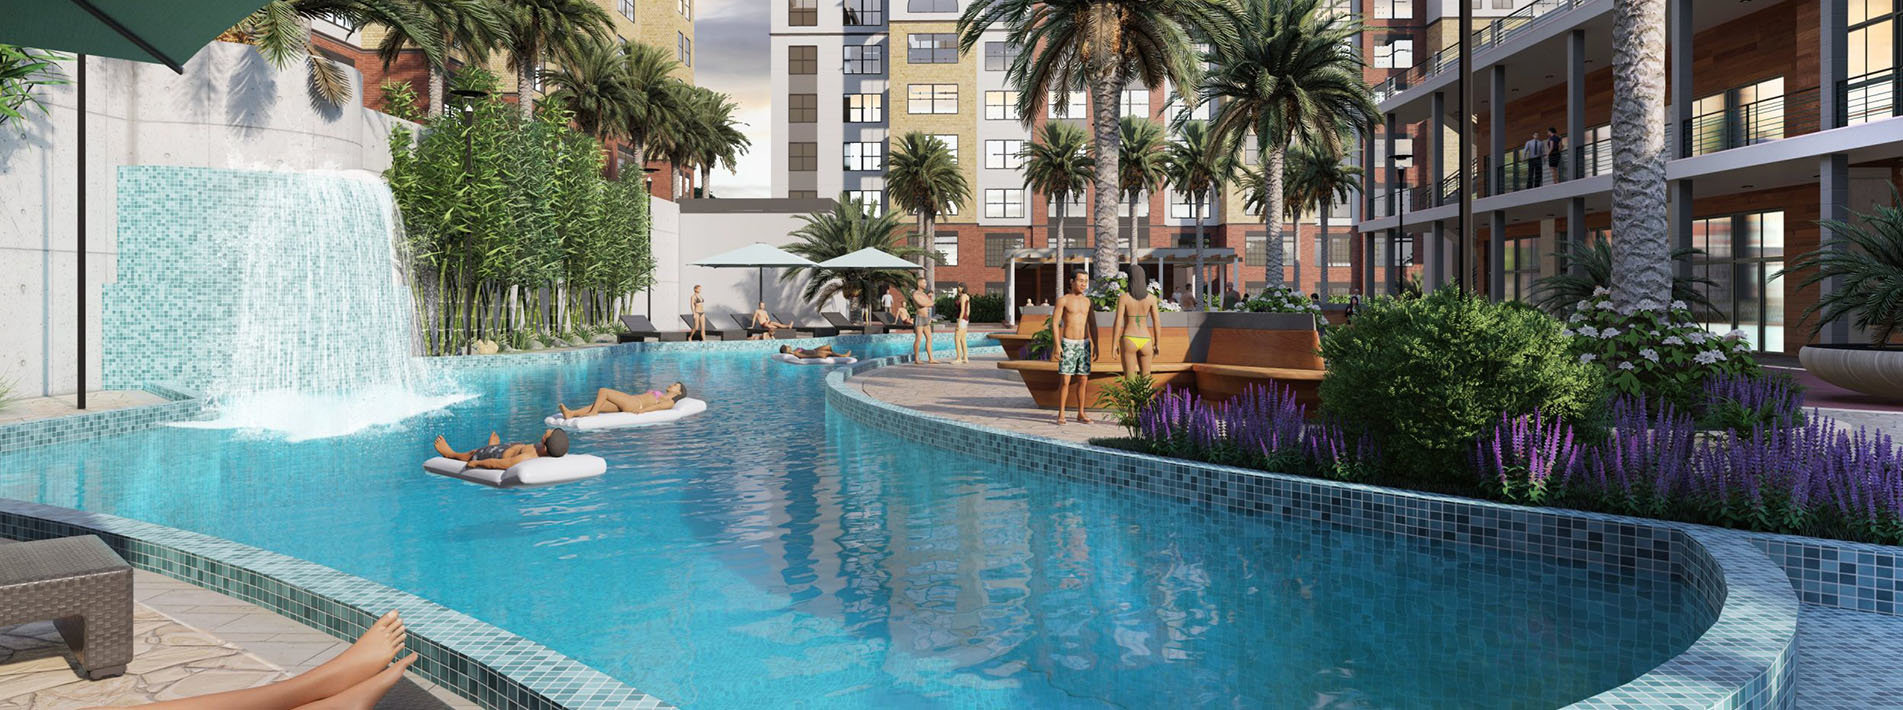 Sycamore Resort Orlando Investment Property